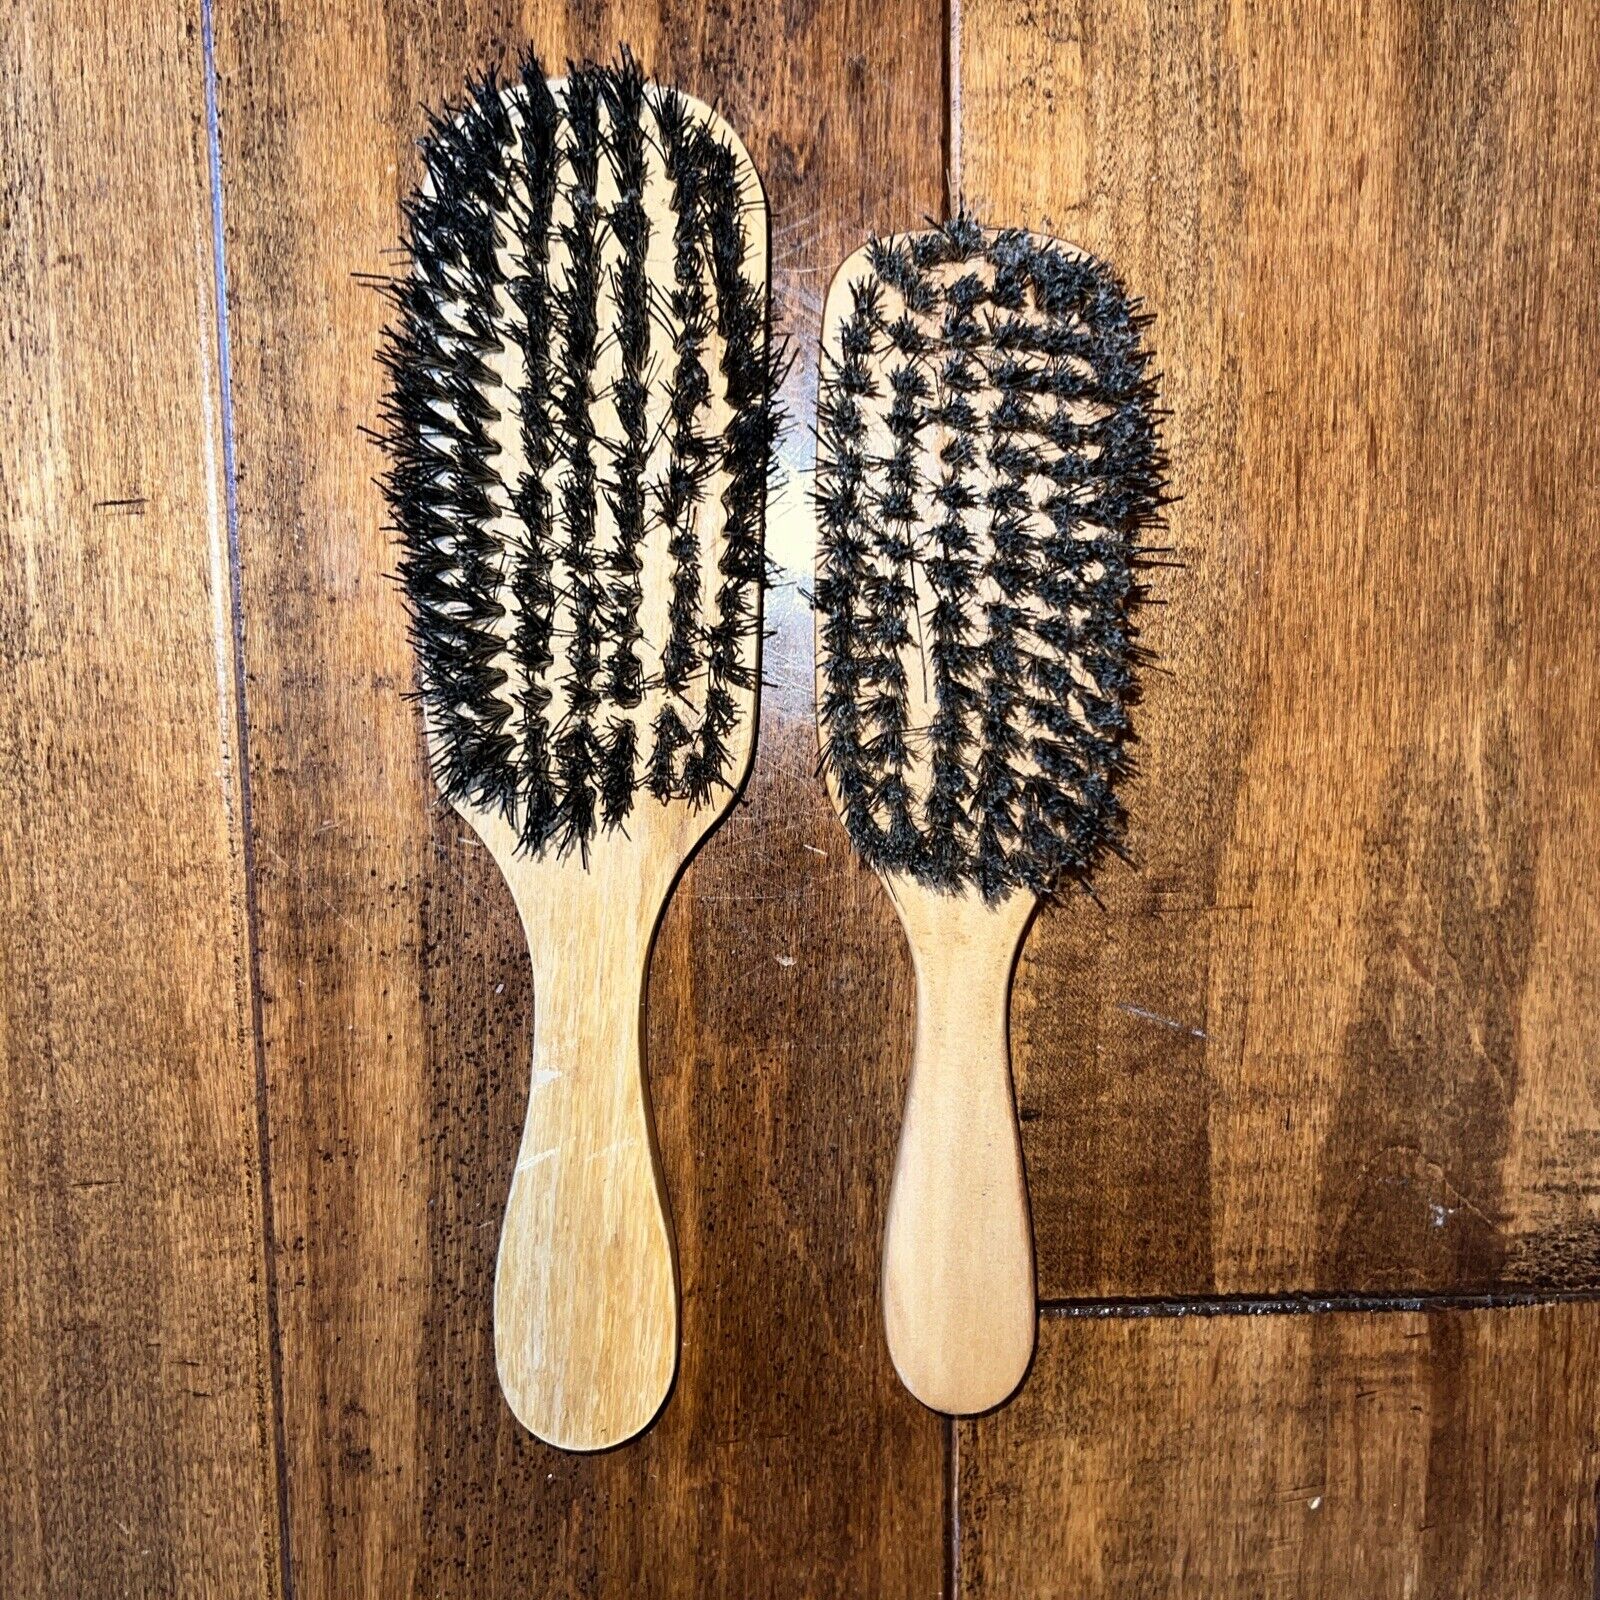 2 Vintage Boar Bristle Hair Brush Brushes Paddle Wooden